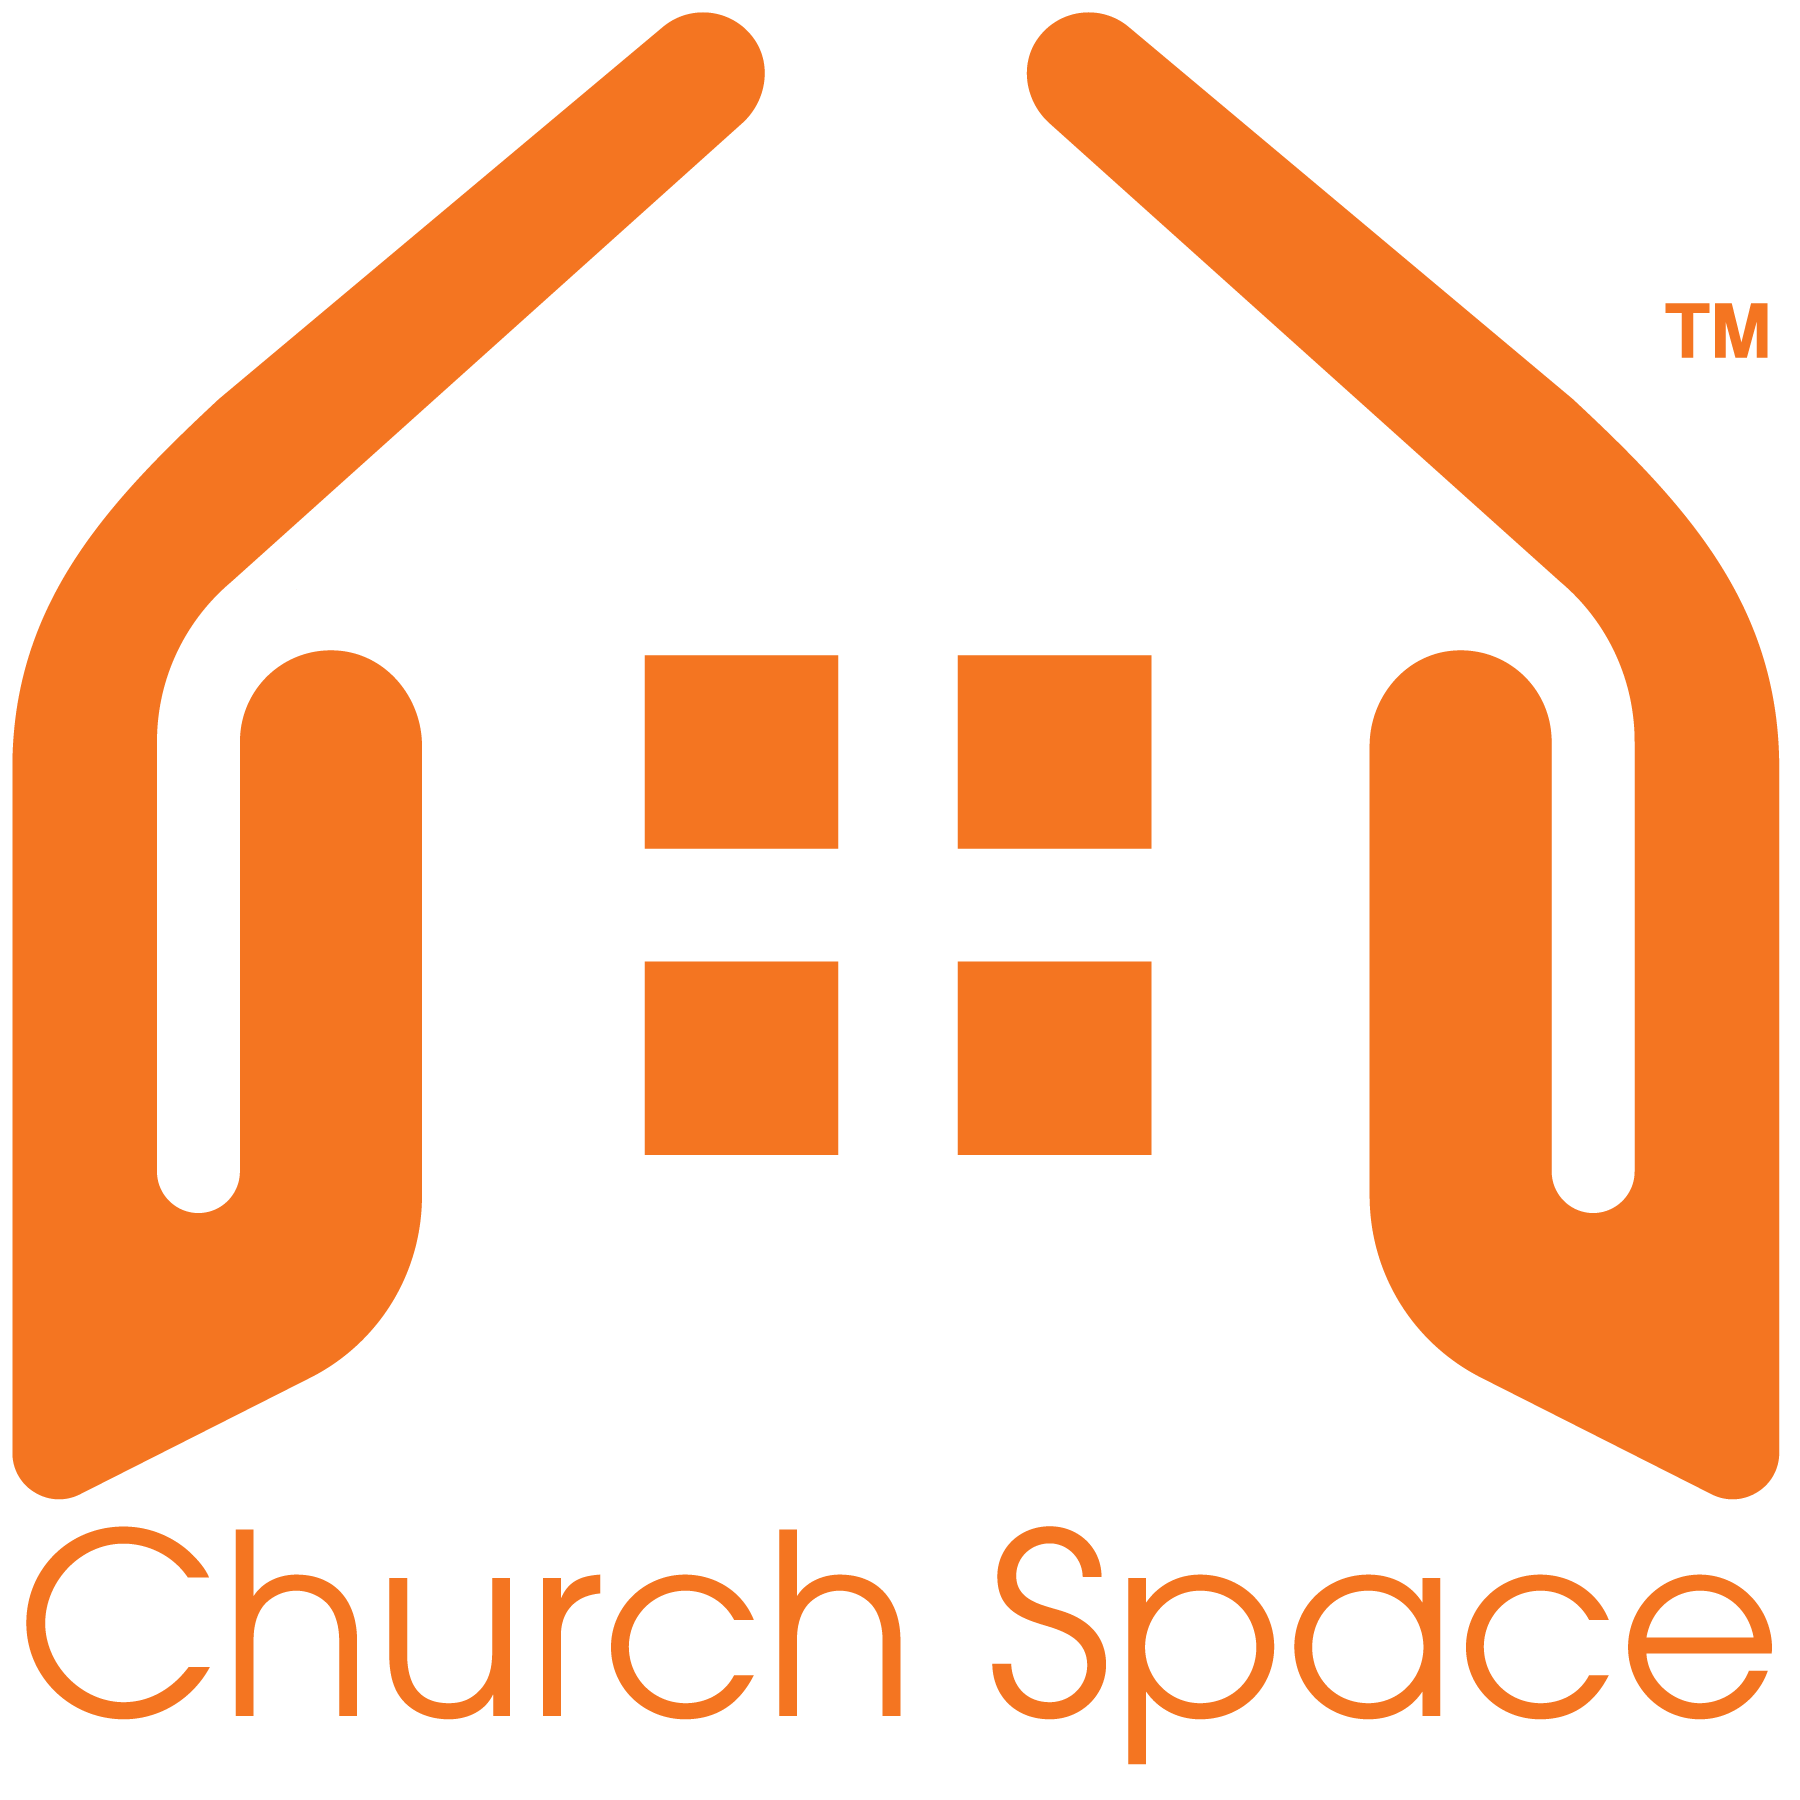 Churchspace logo.png